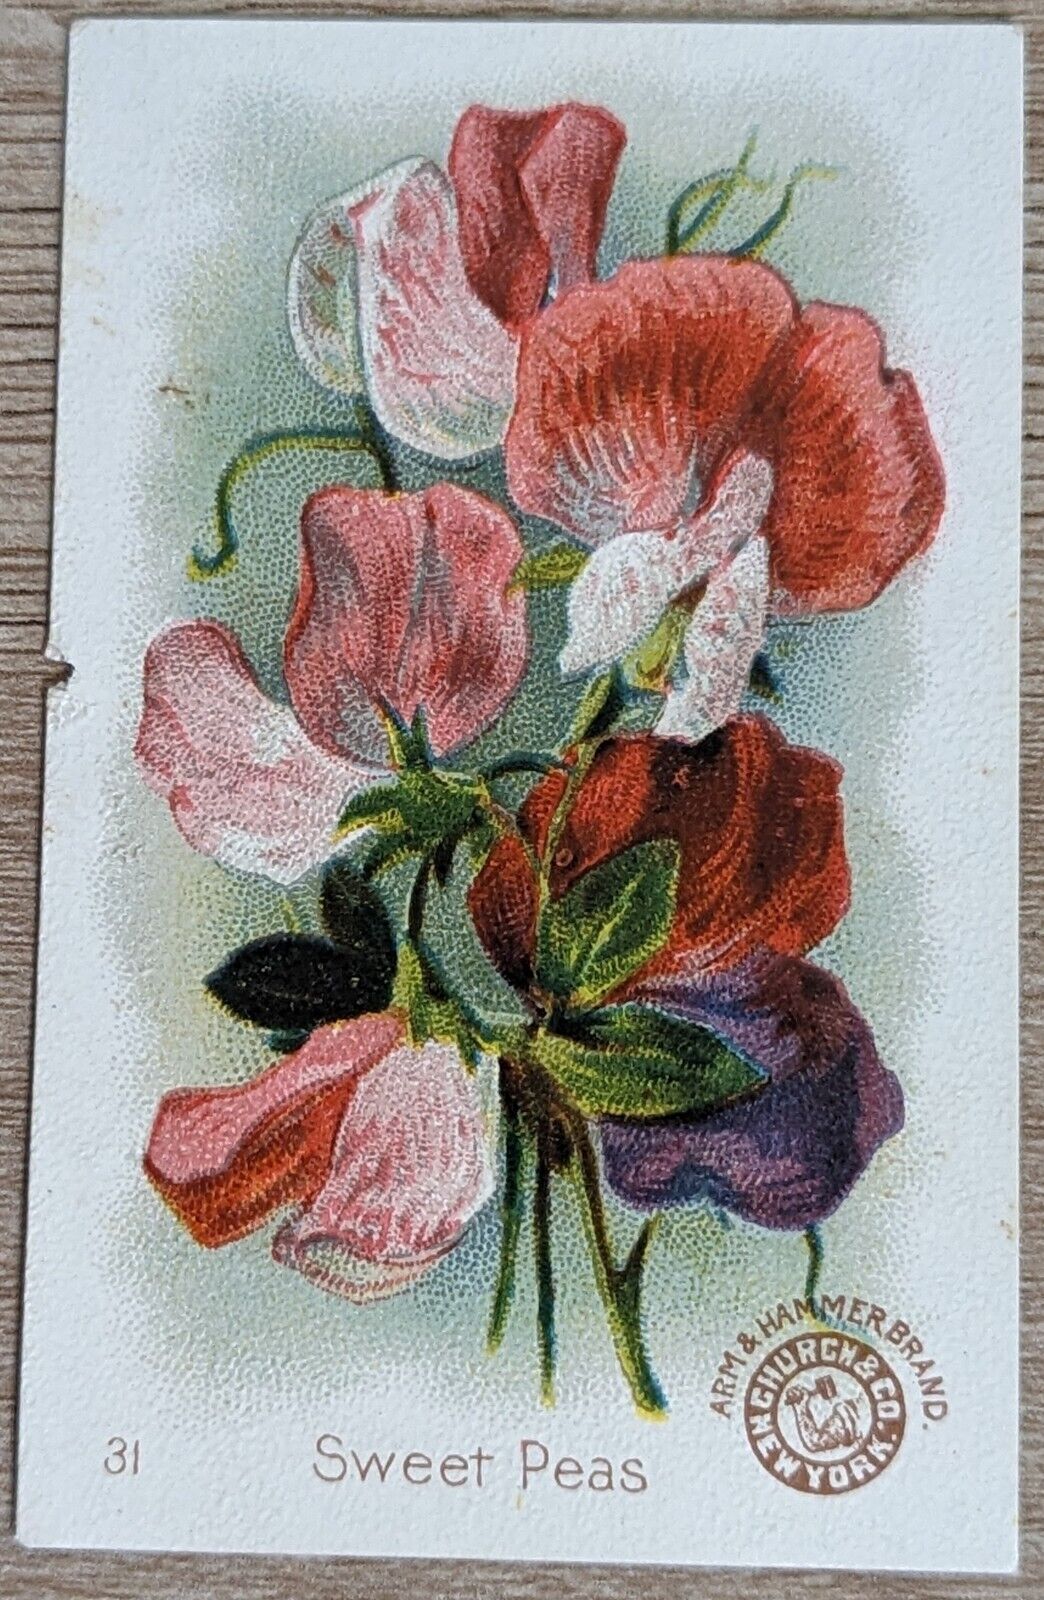 1895 AH800 Church & Co Arm & Hammer Beautiful Flowers Sweet Peas Trade Card #31